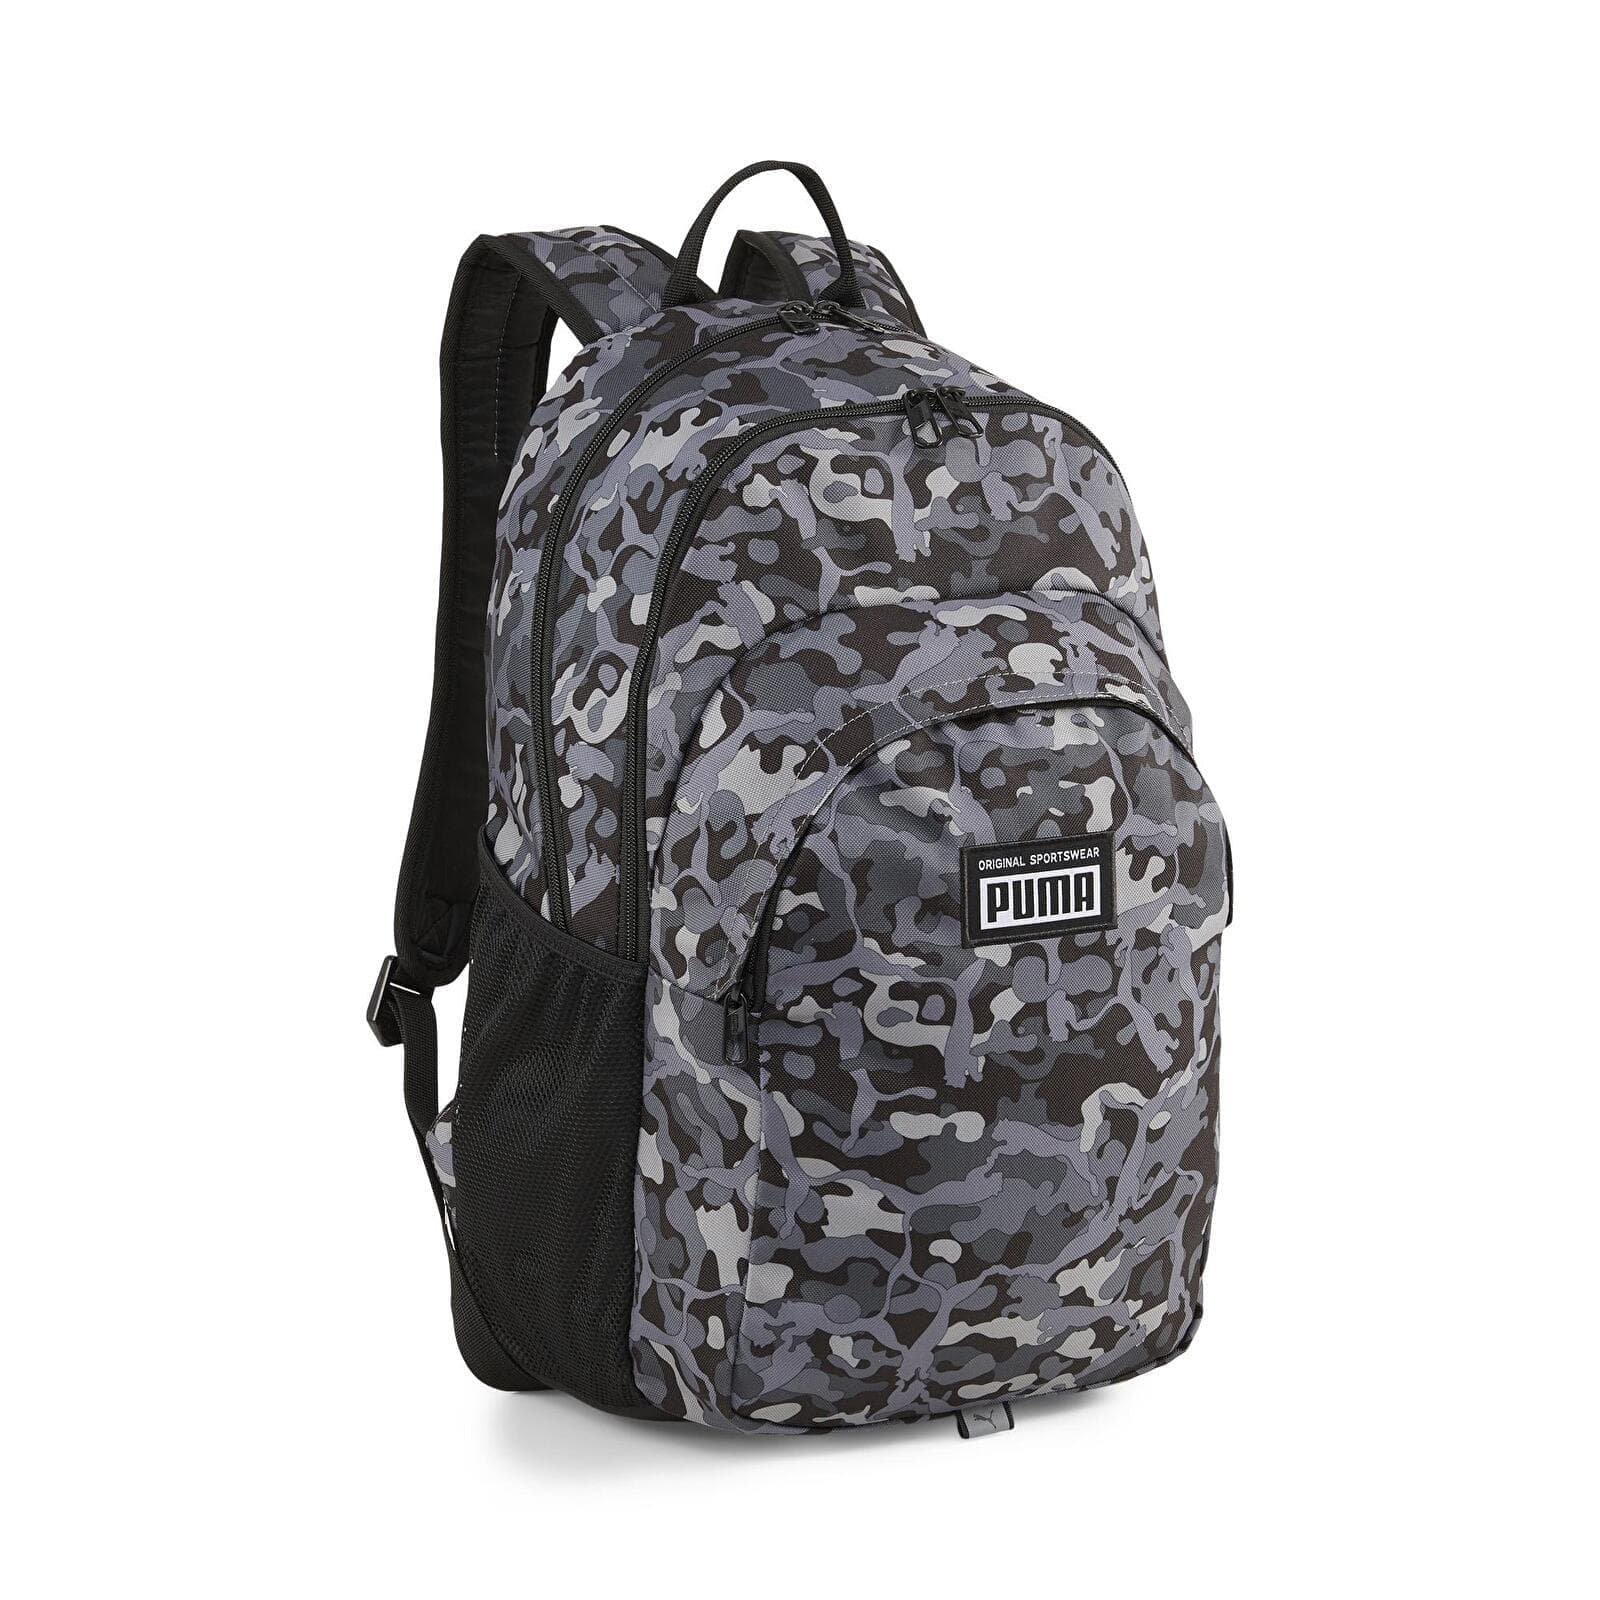 Backpack Academy Backpack Gray, Universal